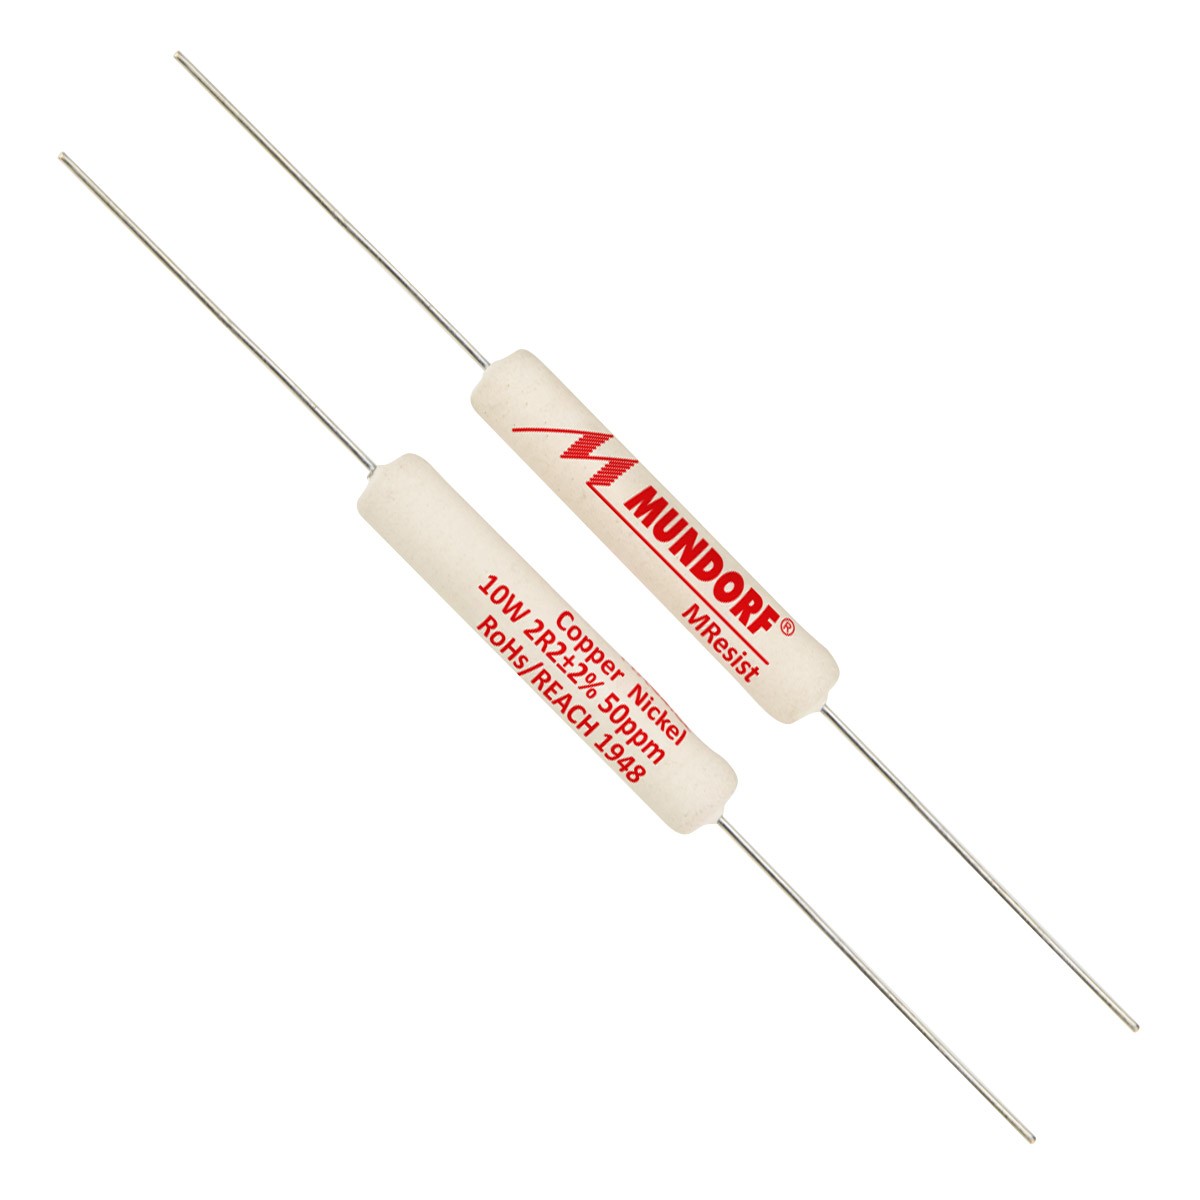 MUNDORF MRESIST CLASSIC Resistor 10W 18 Ohm